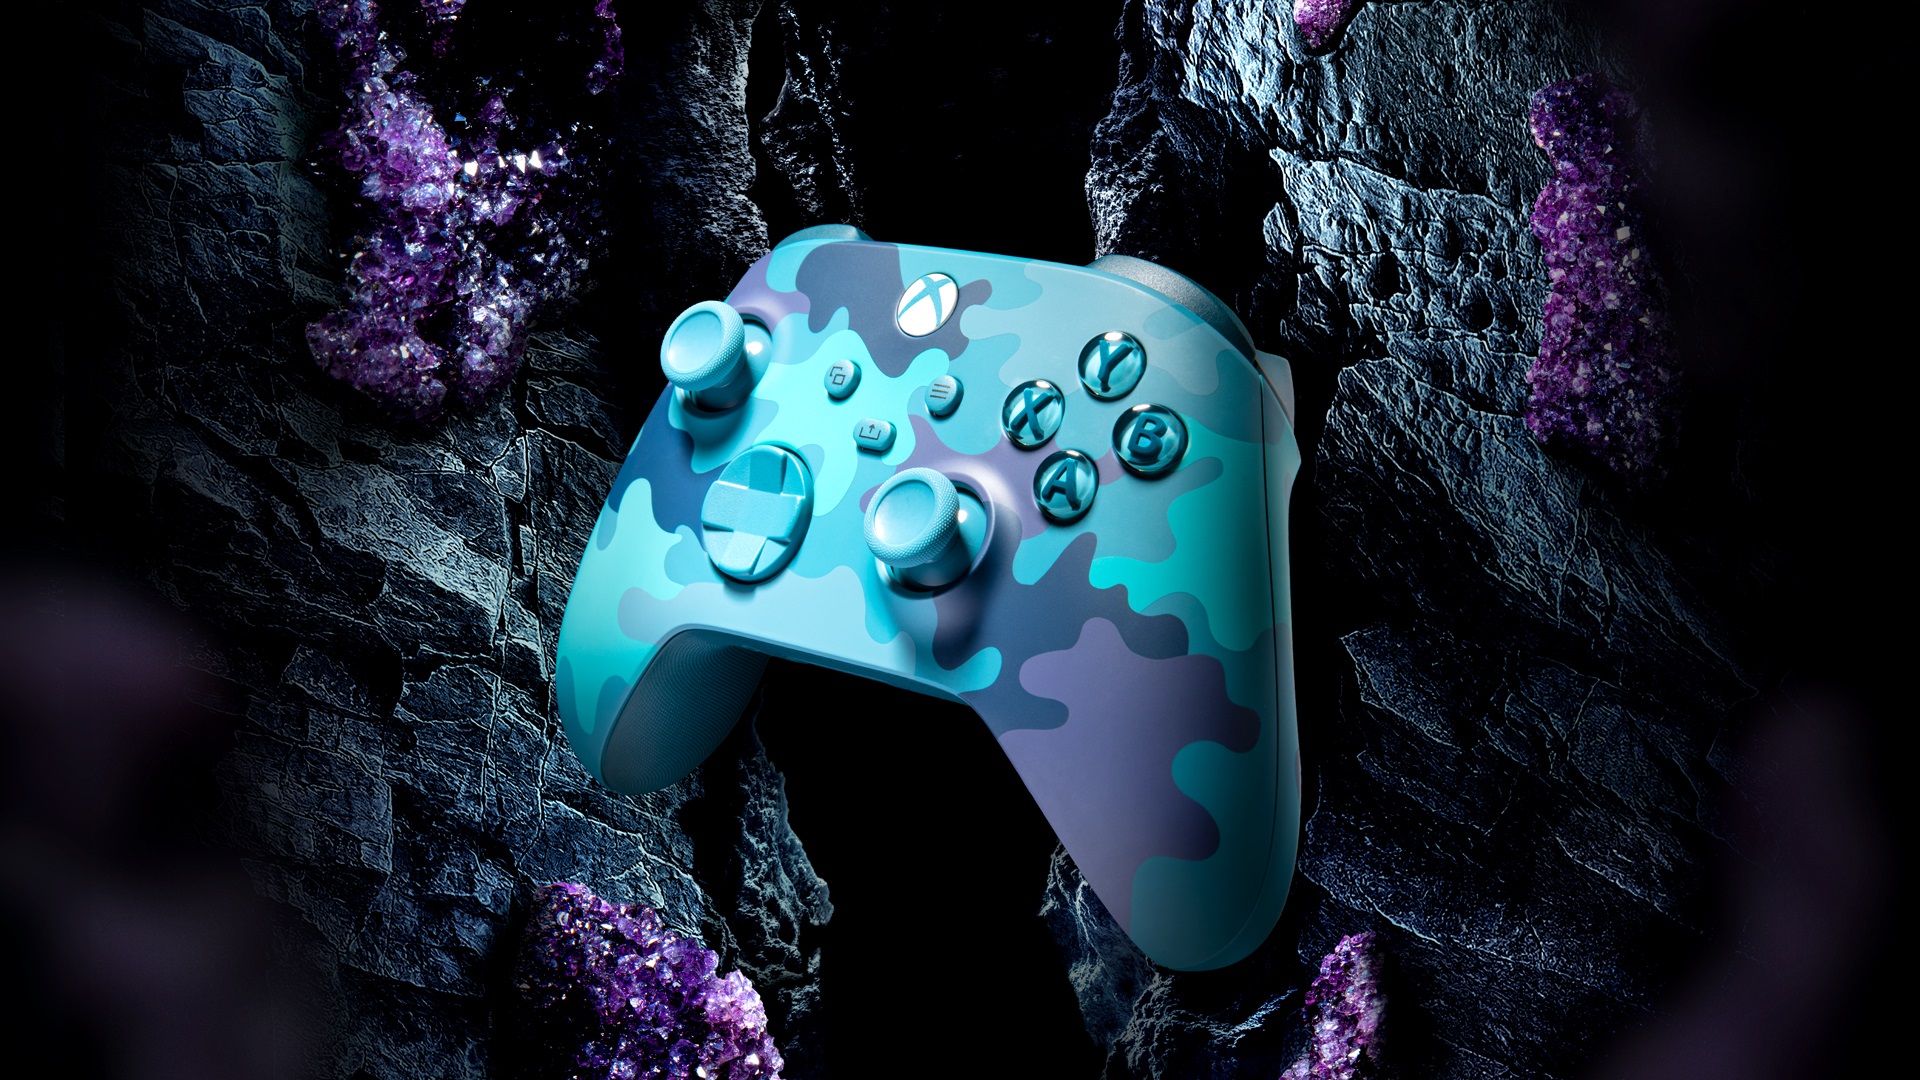 Xbox Wireless Controller in Mineral Camo color announced